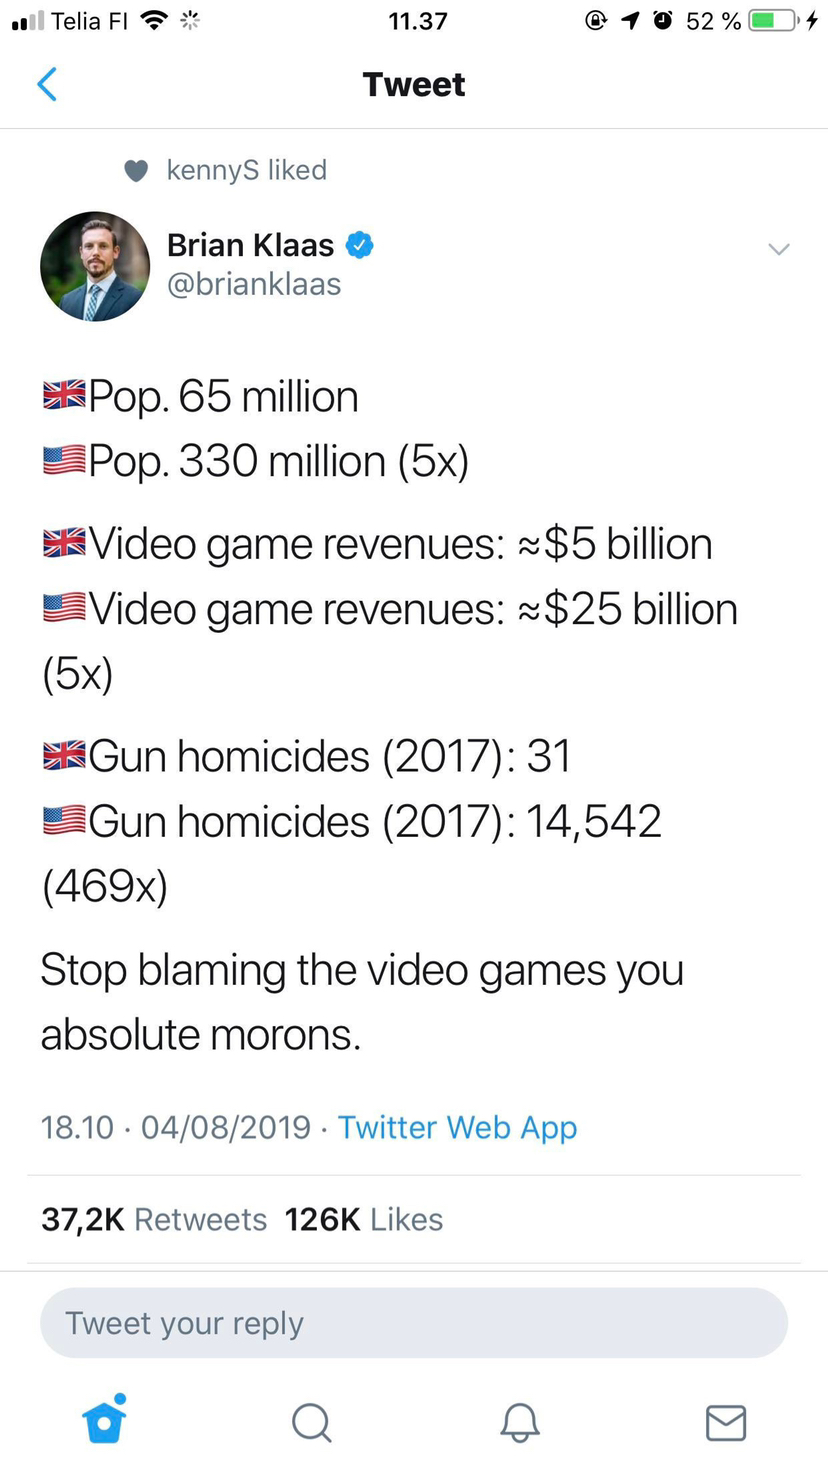 video games gun violence tweet - .Telia Fl 11.37 @ 1 0 52% 4 Tweet kennys d Brian Klaas Pop. 65 million Pop. 330 million 5x Video game revenues $5 billion Video game revenues